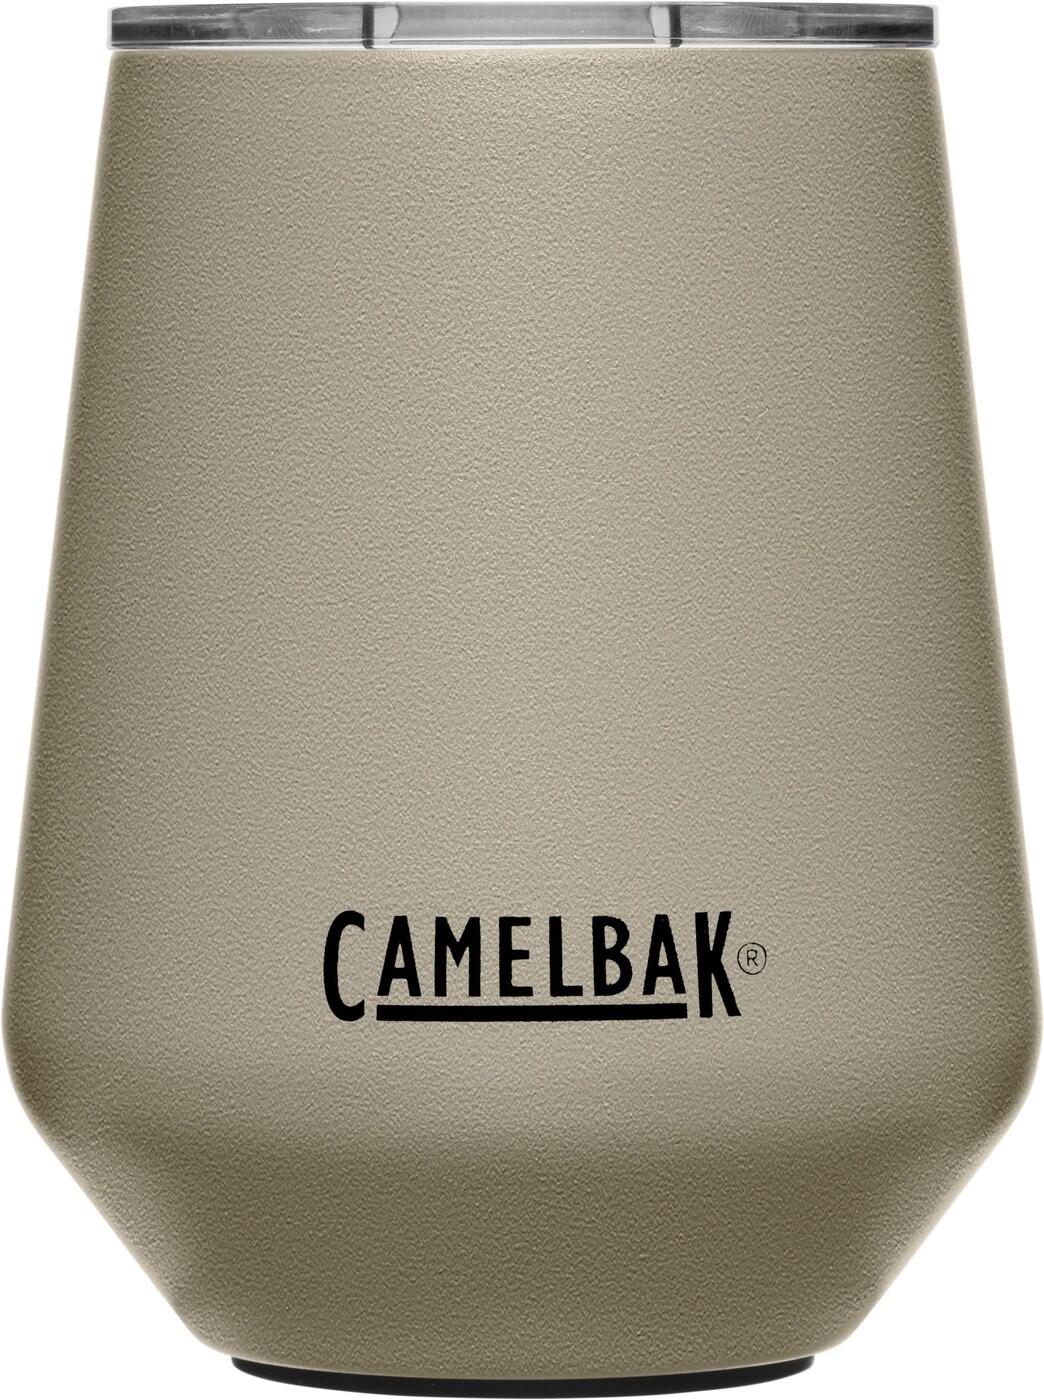 Camelbak Wine Tumbler